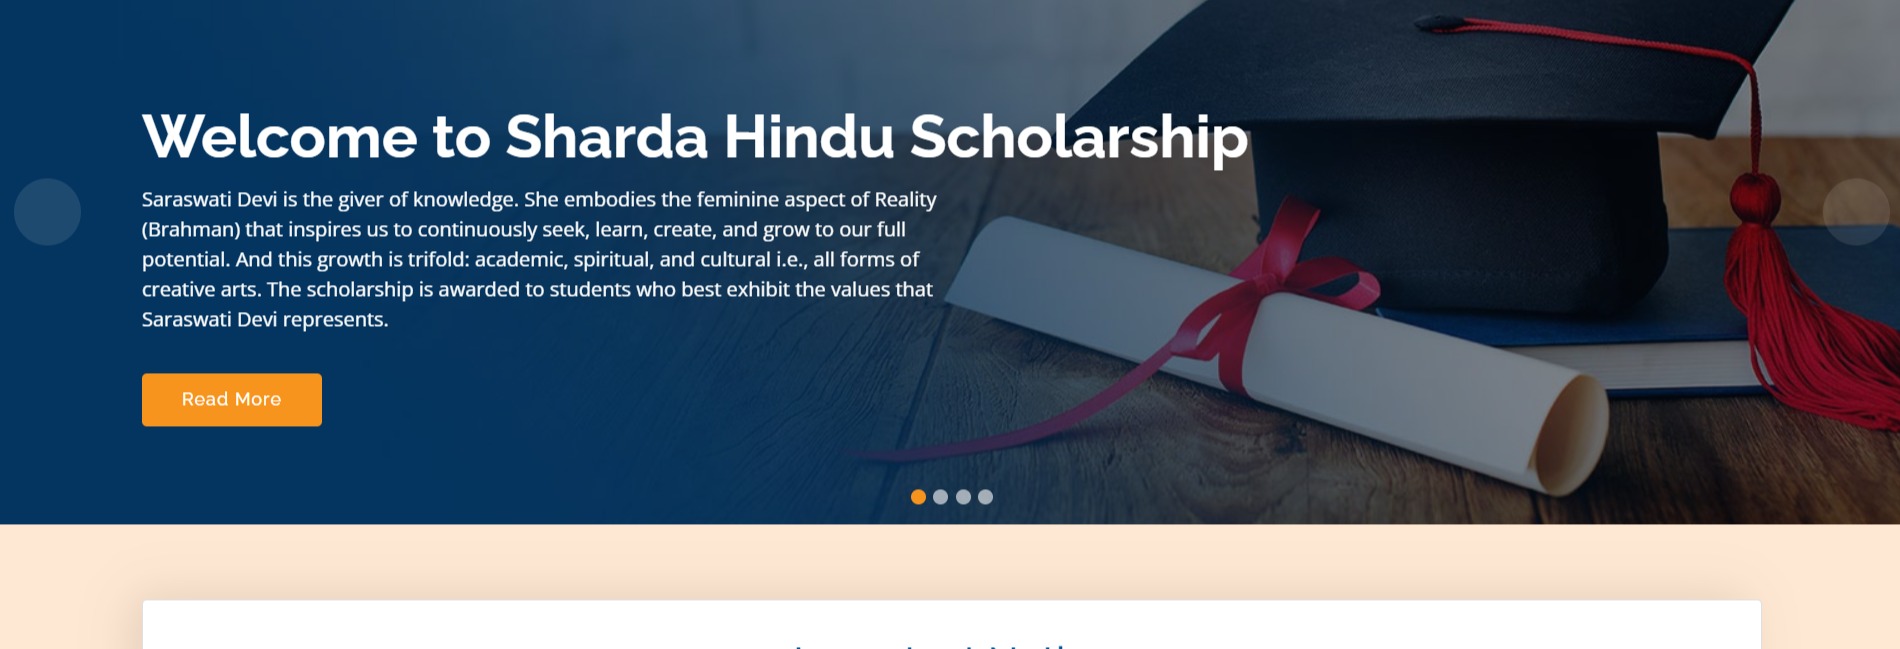 Sharada Hindu Scholarship’s Awards